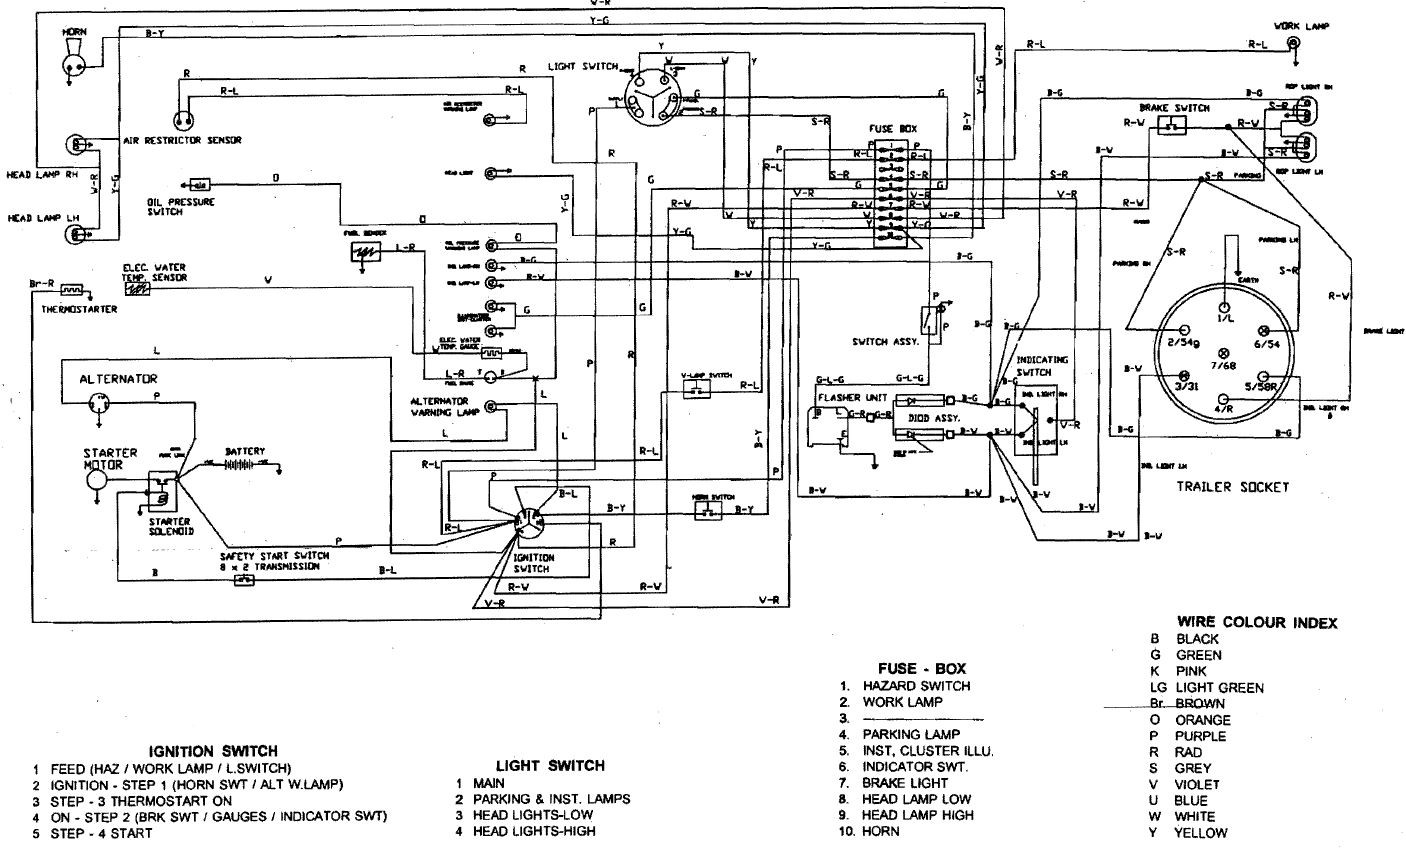 Ignition Switch Wiring Diagram HVAC Wiring Diagrams 35d Wiring Diagram